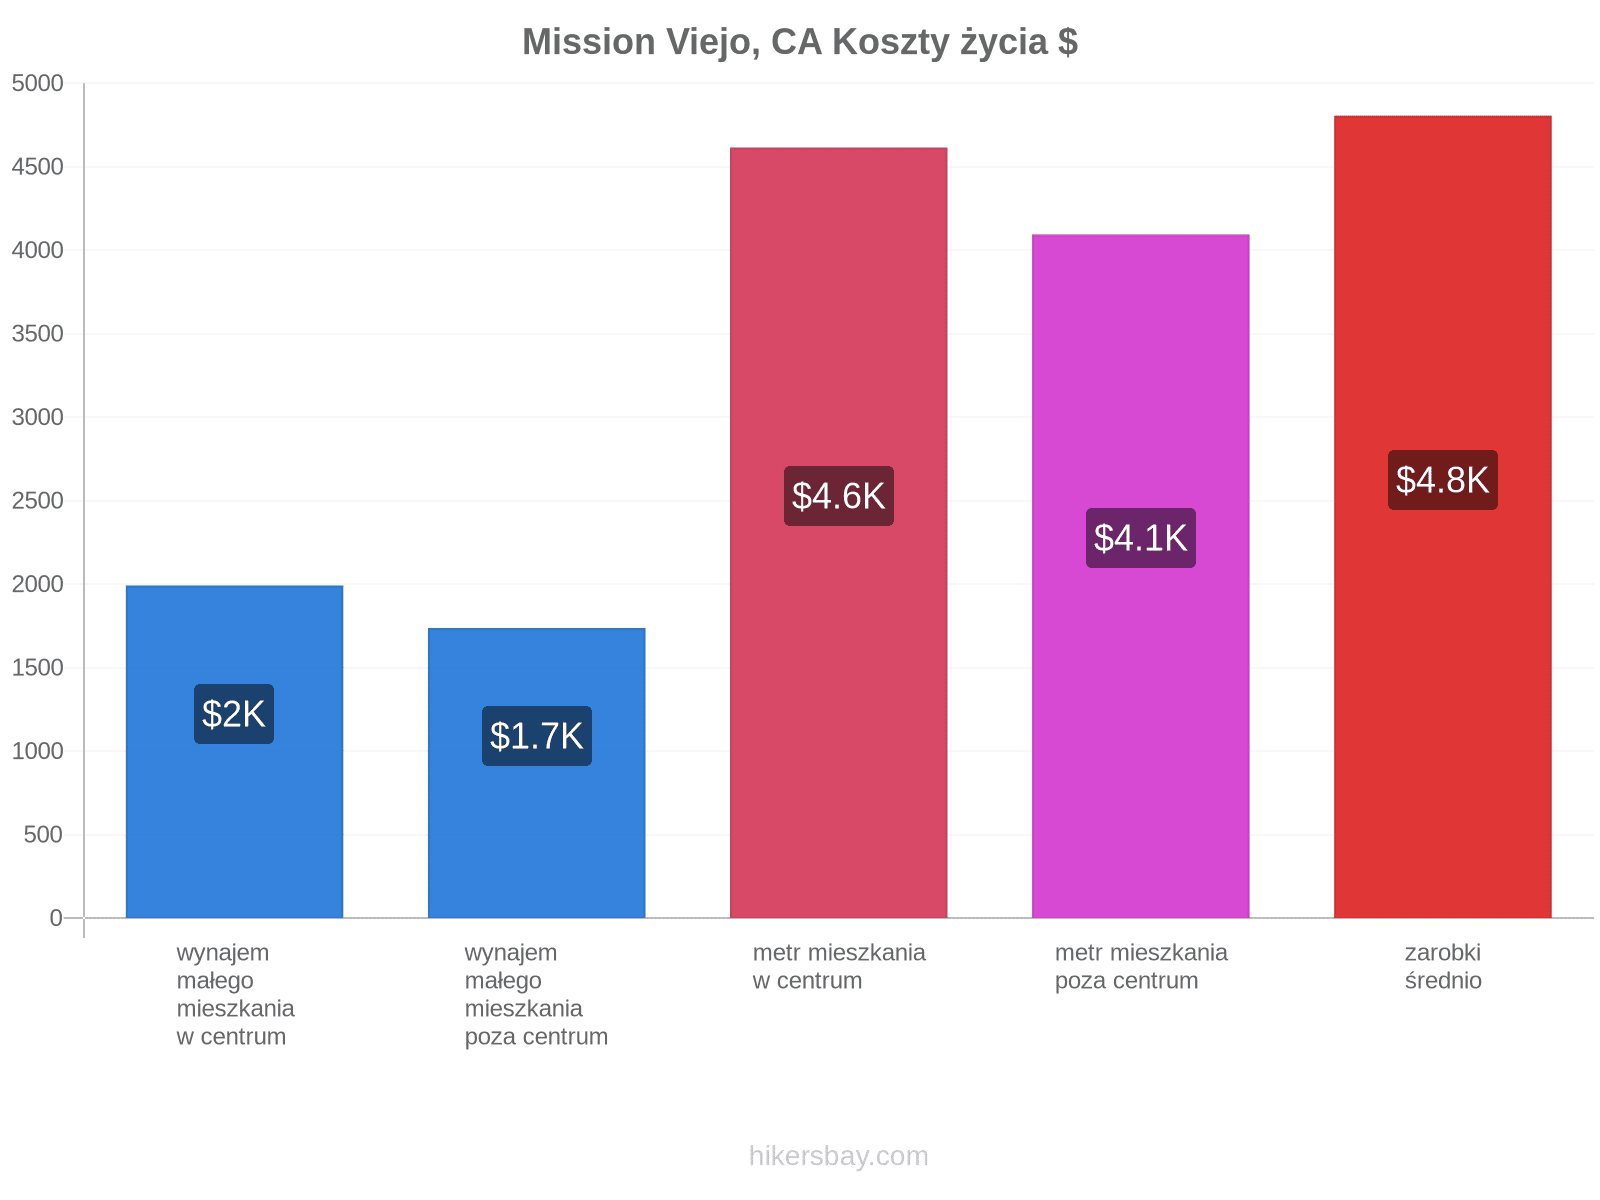 Mission Viejo, CA koszty życia hikersbay.com